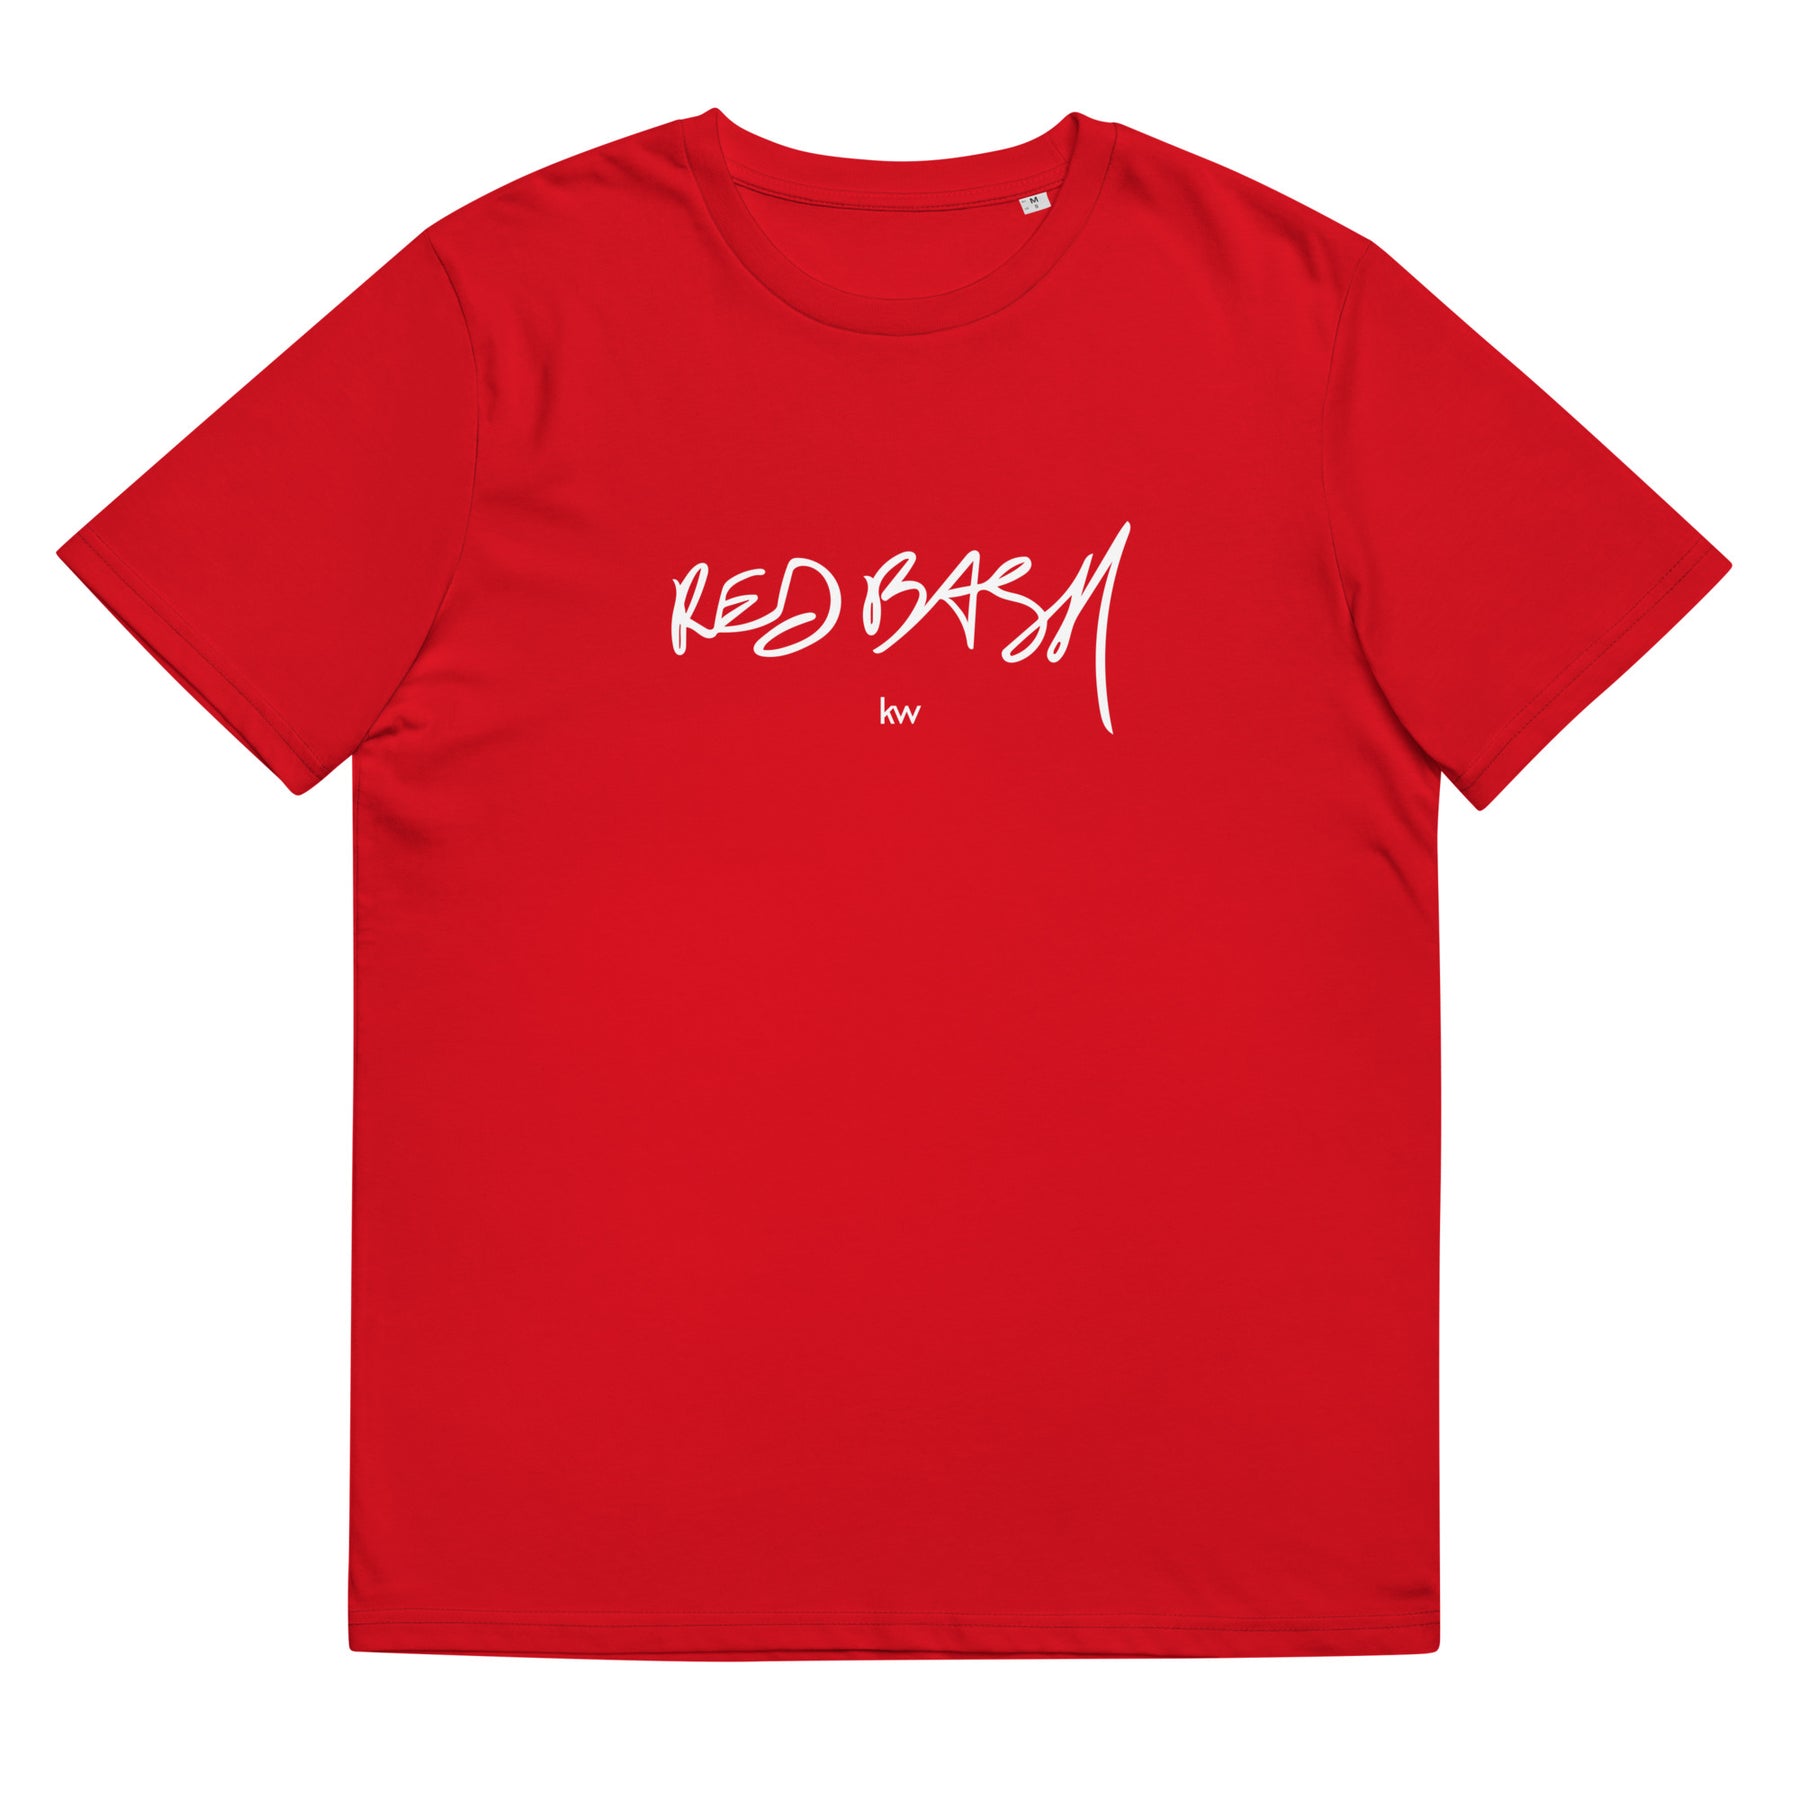 T-shirt Premium unisexe - Red Bash | FR24FRANCE